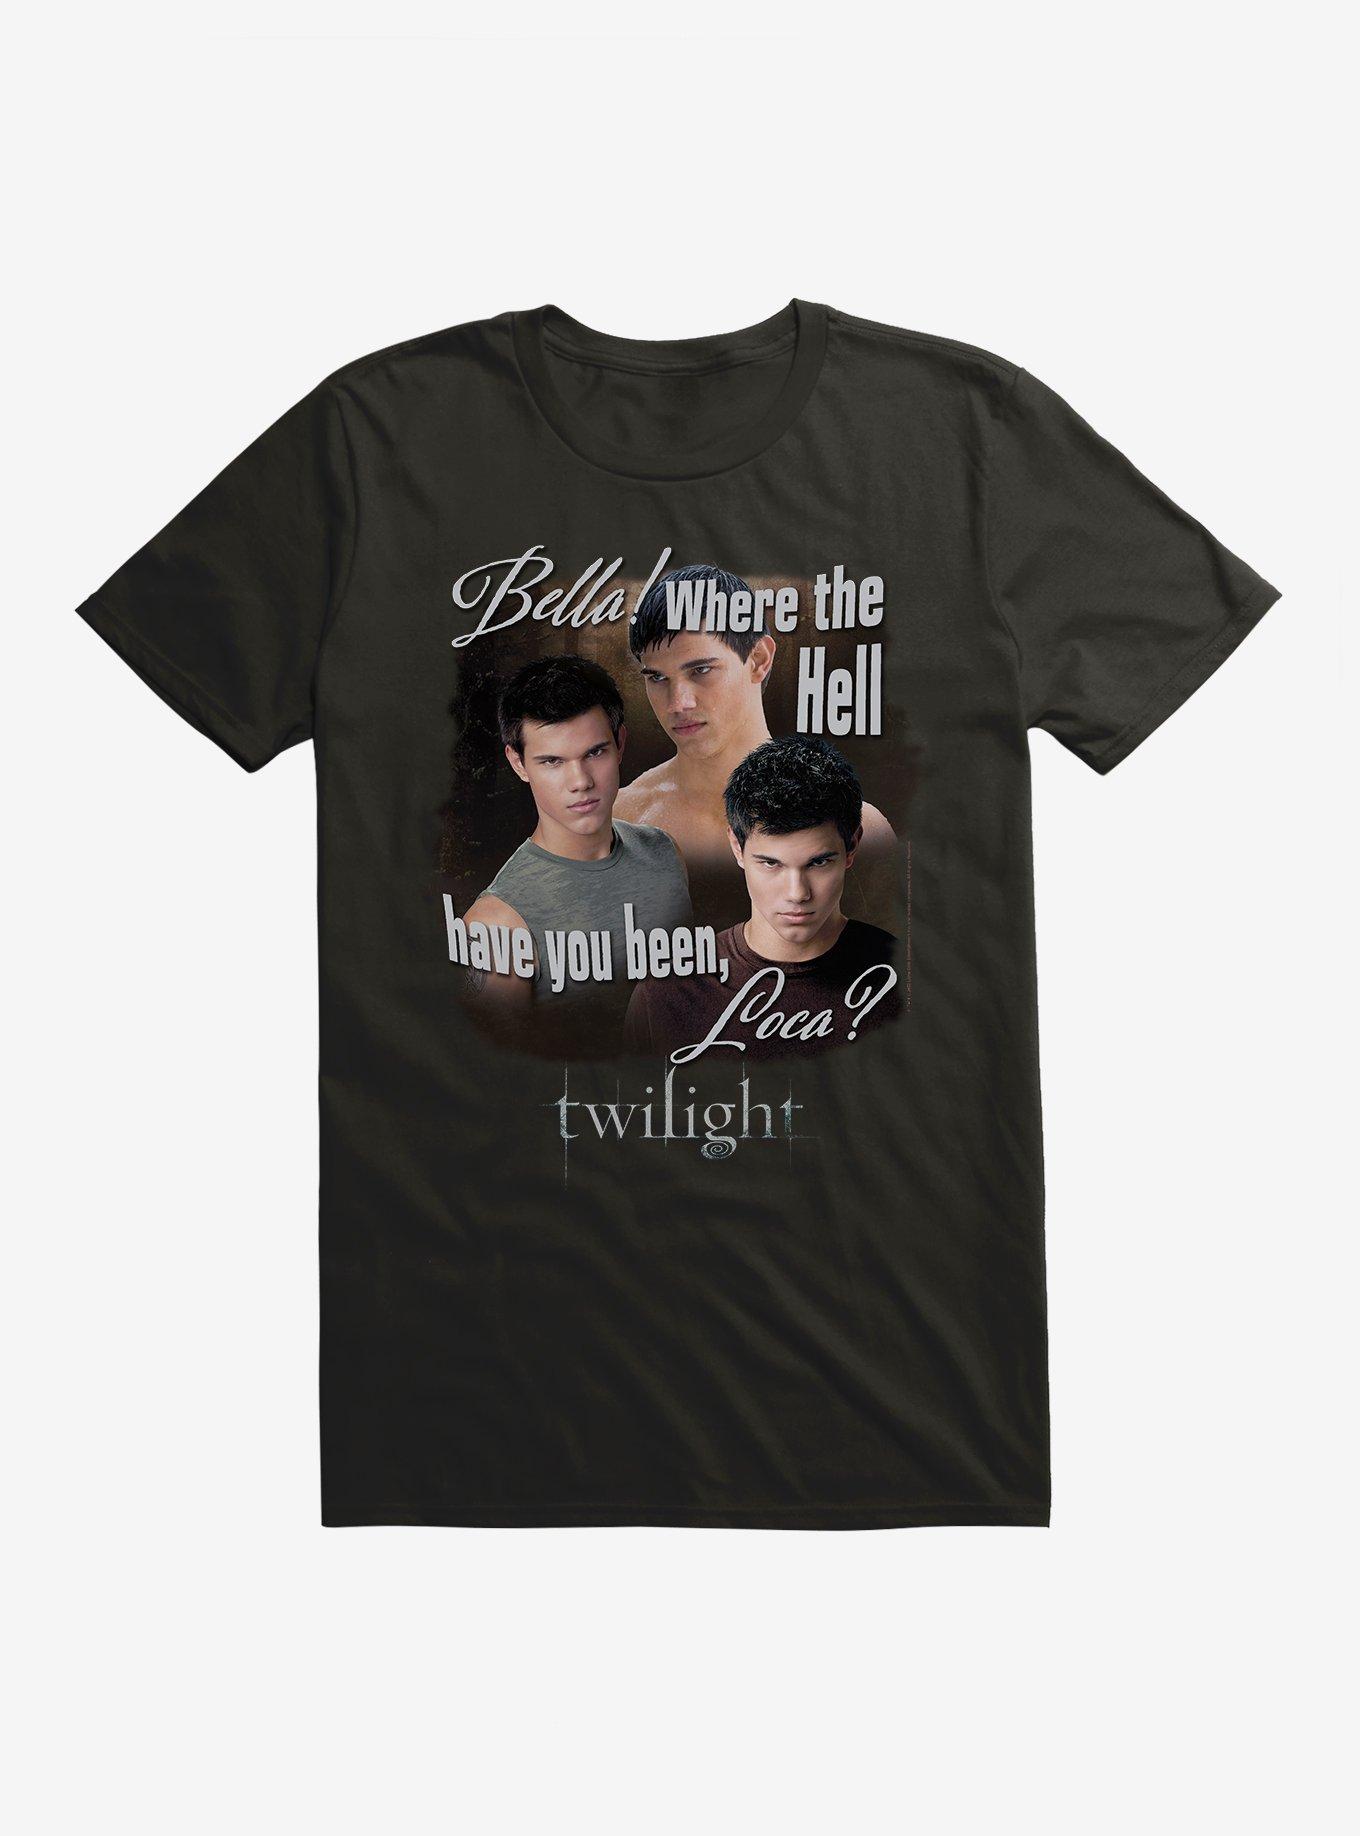 Twilight Jacob Where You Been Loca T-Shirt - BLACK